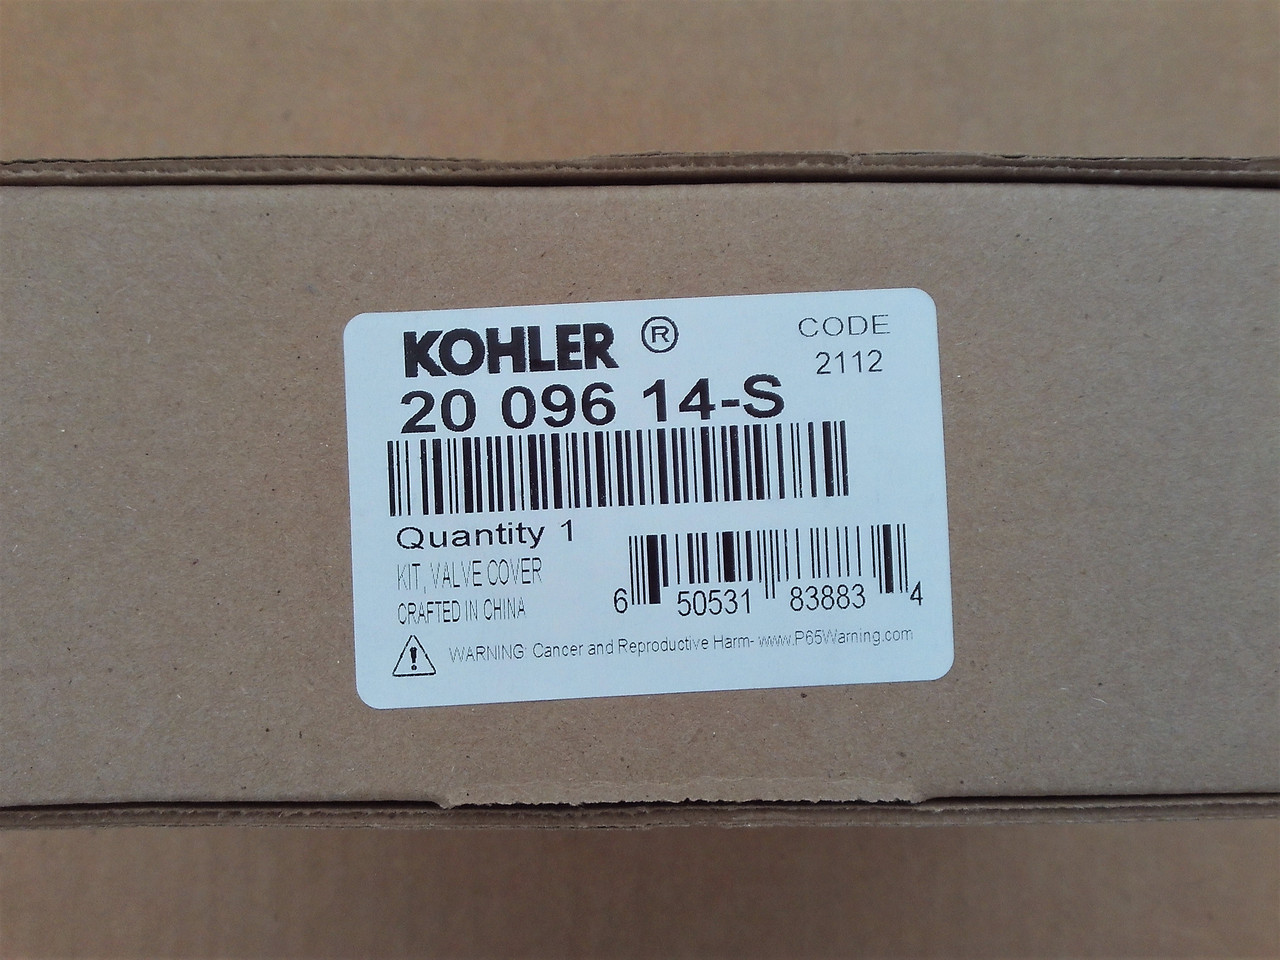 Valve Cover for Kohler SV470, SV480, SV530, SV540, SV590, SV600, 2009607S, 2009614S, 20 096 07-S, 20 096 14-S, includes gasket